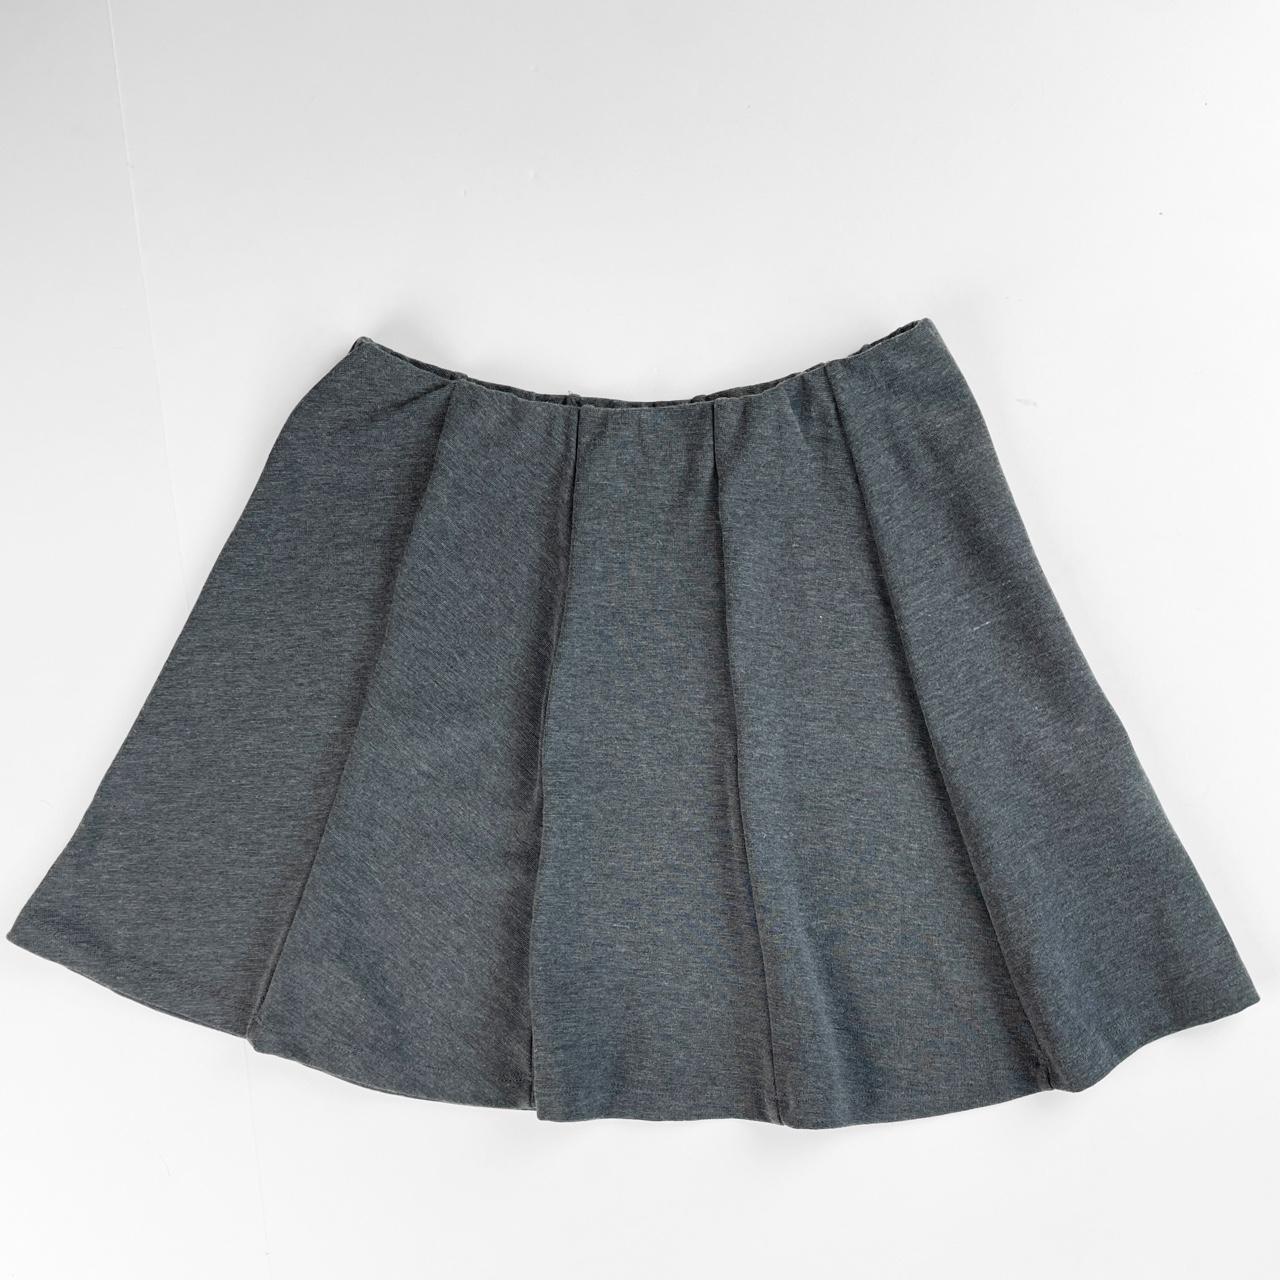 Product Image 2 - Pleated Mini Skirt

Cutest little grey